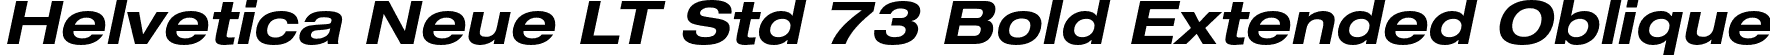 Helvetica Neue LT Std 73 Bold Extended Oblique font - HelveticaNeueLTStd-BdExO.otf